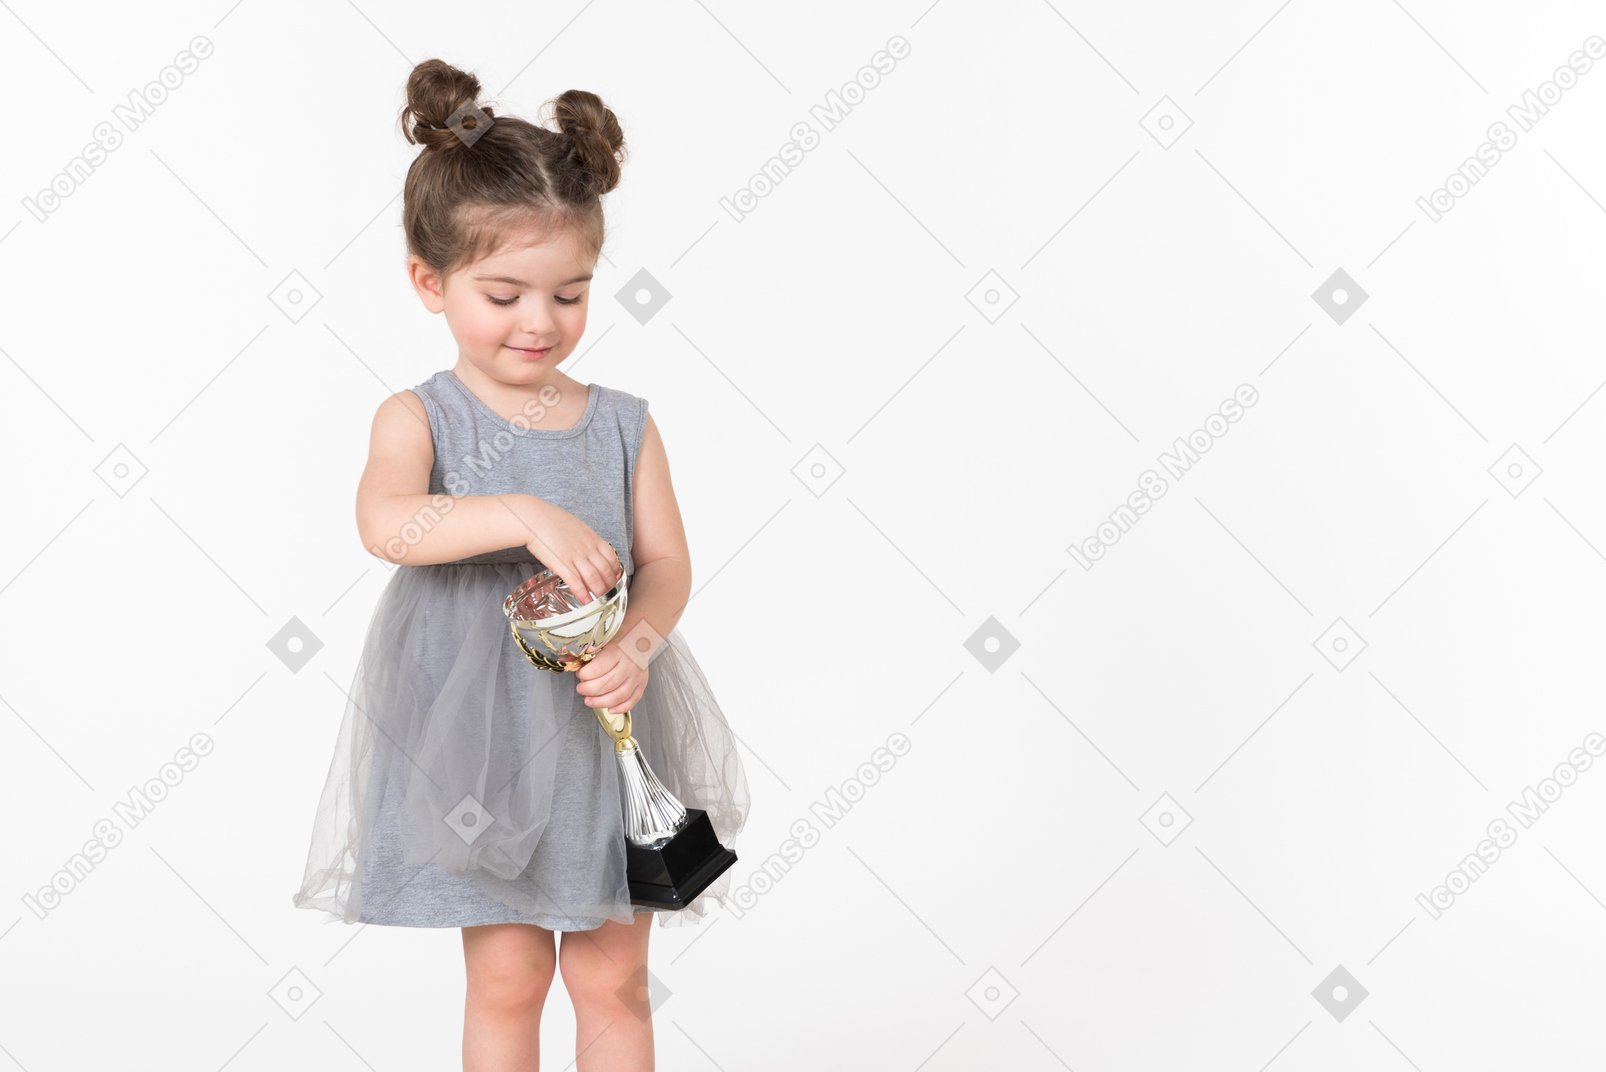 Little girl holding an award cup